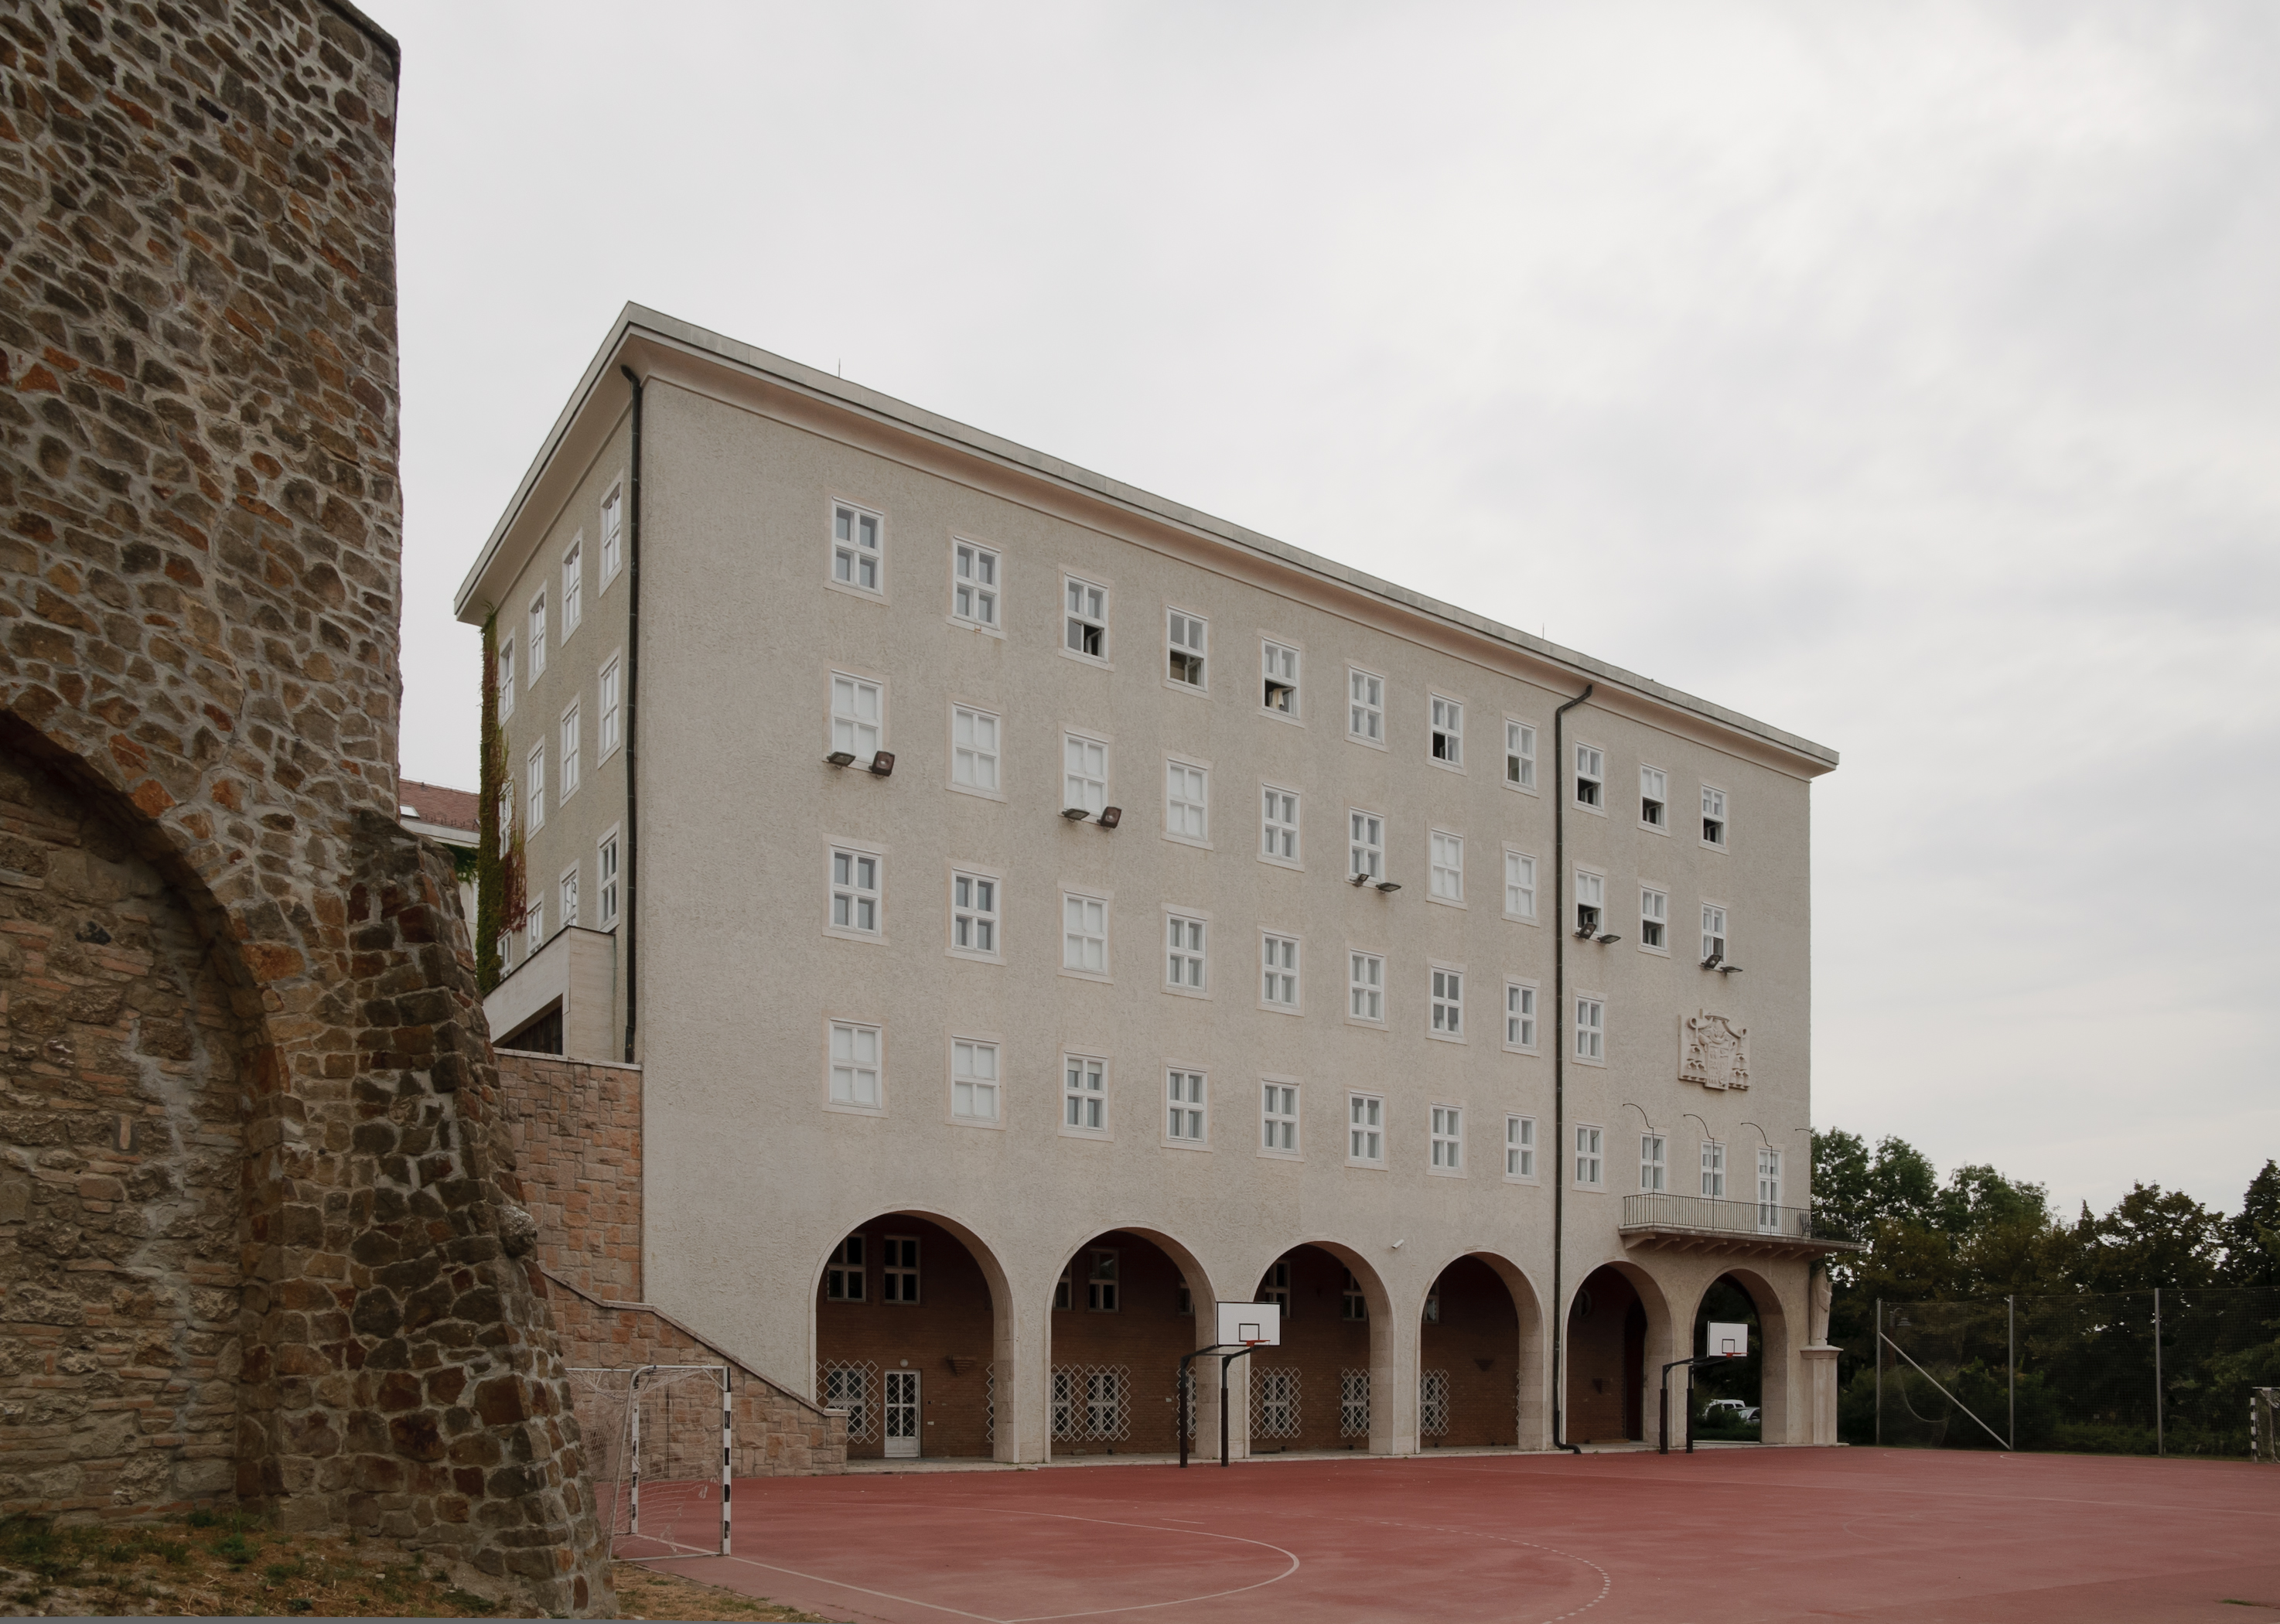 Benedictine High School of Pannonhalma